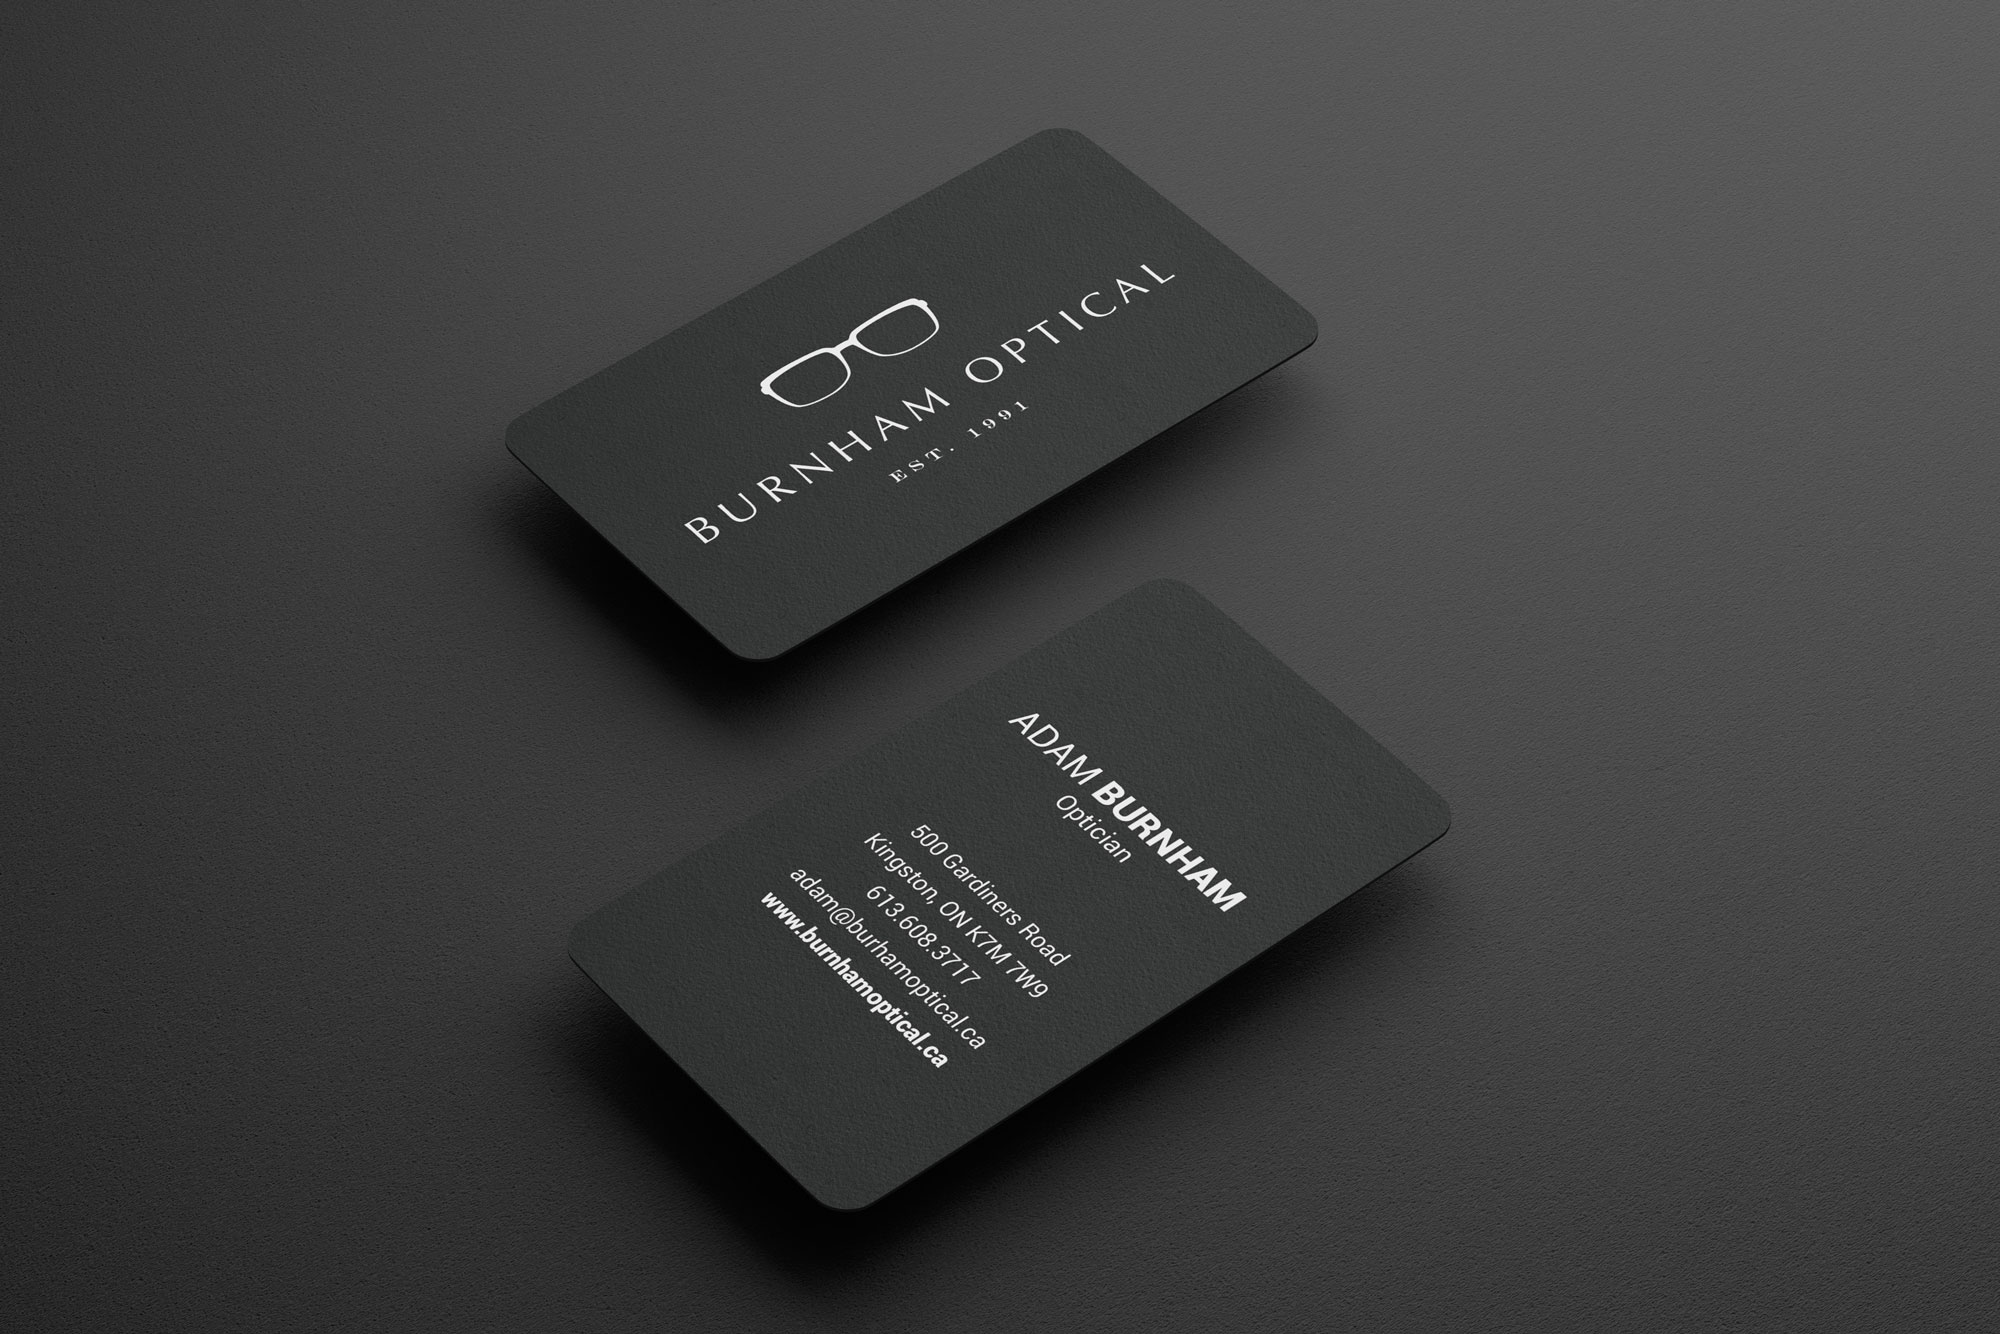 an image of business cards designed for burnham optical